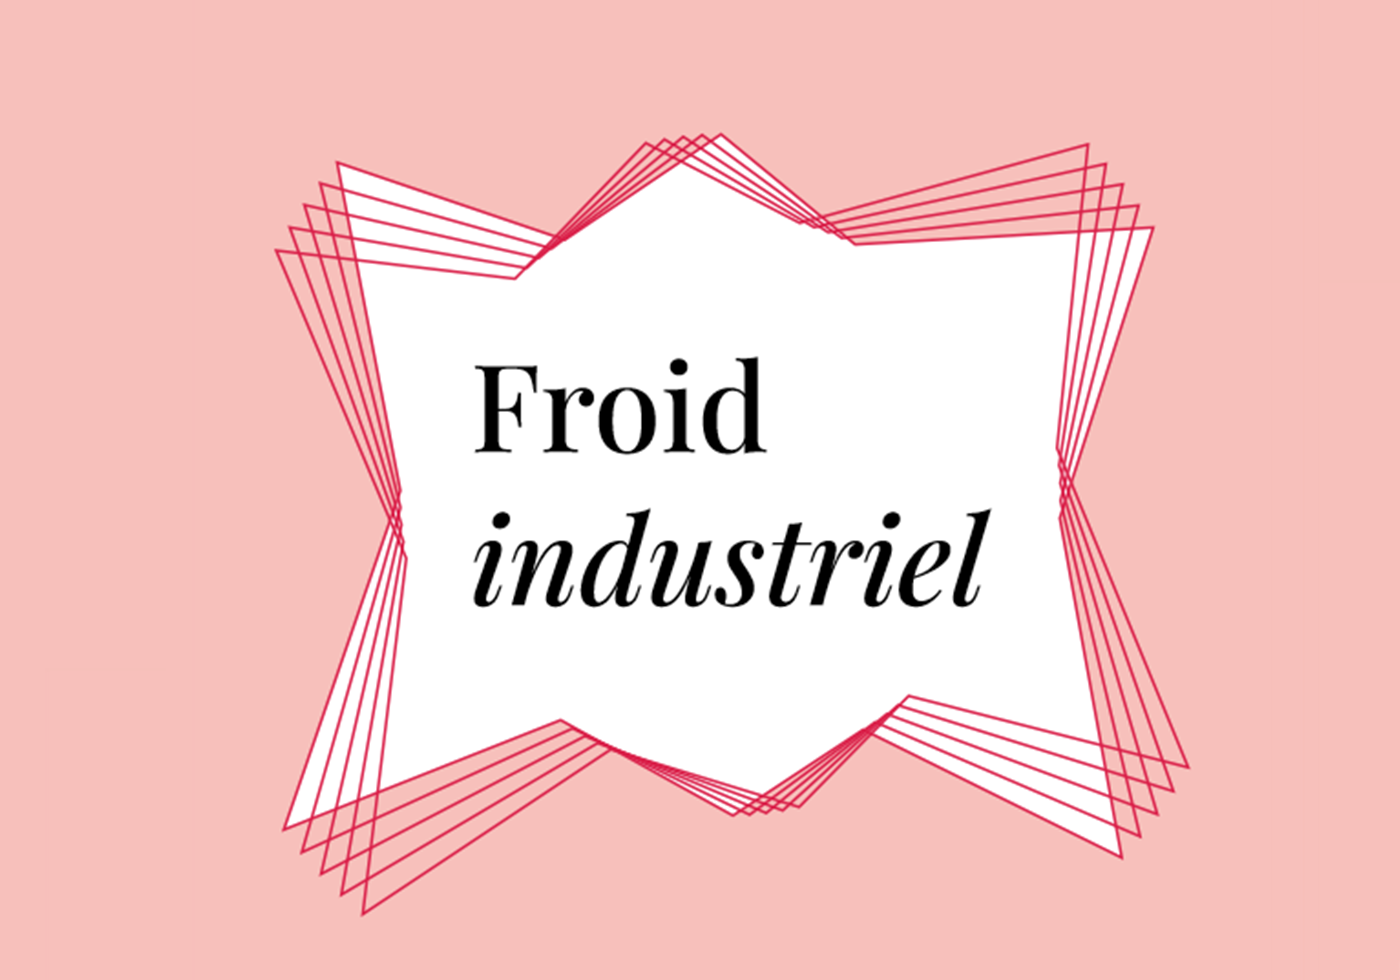 Froid industriel 1400x980